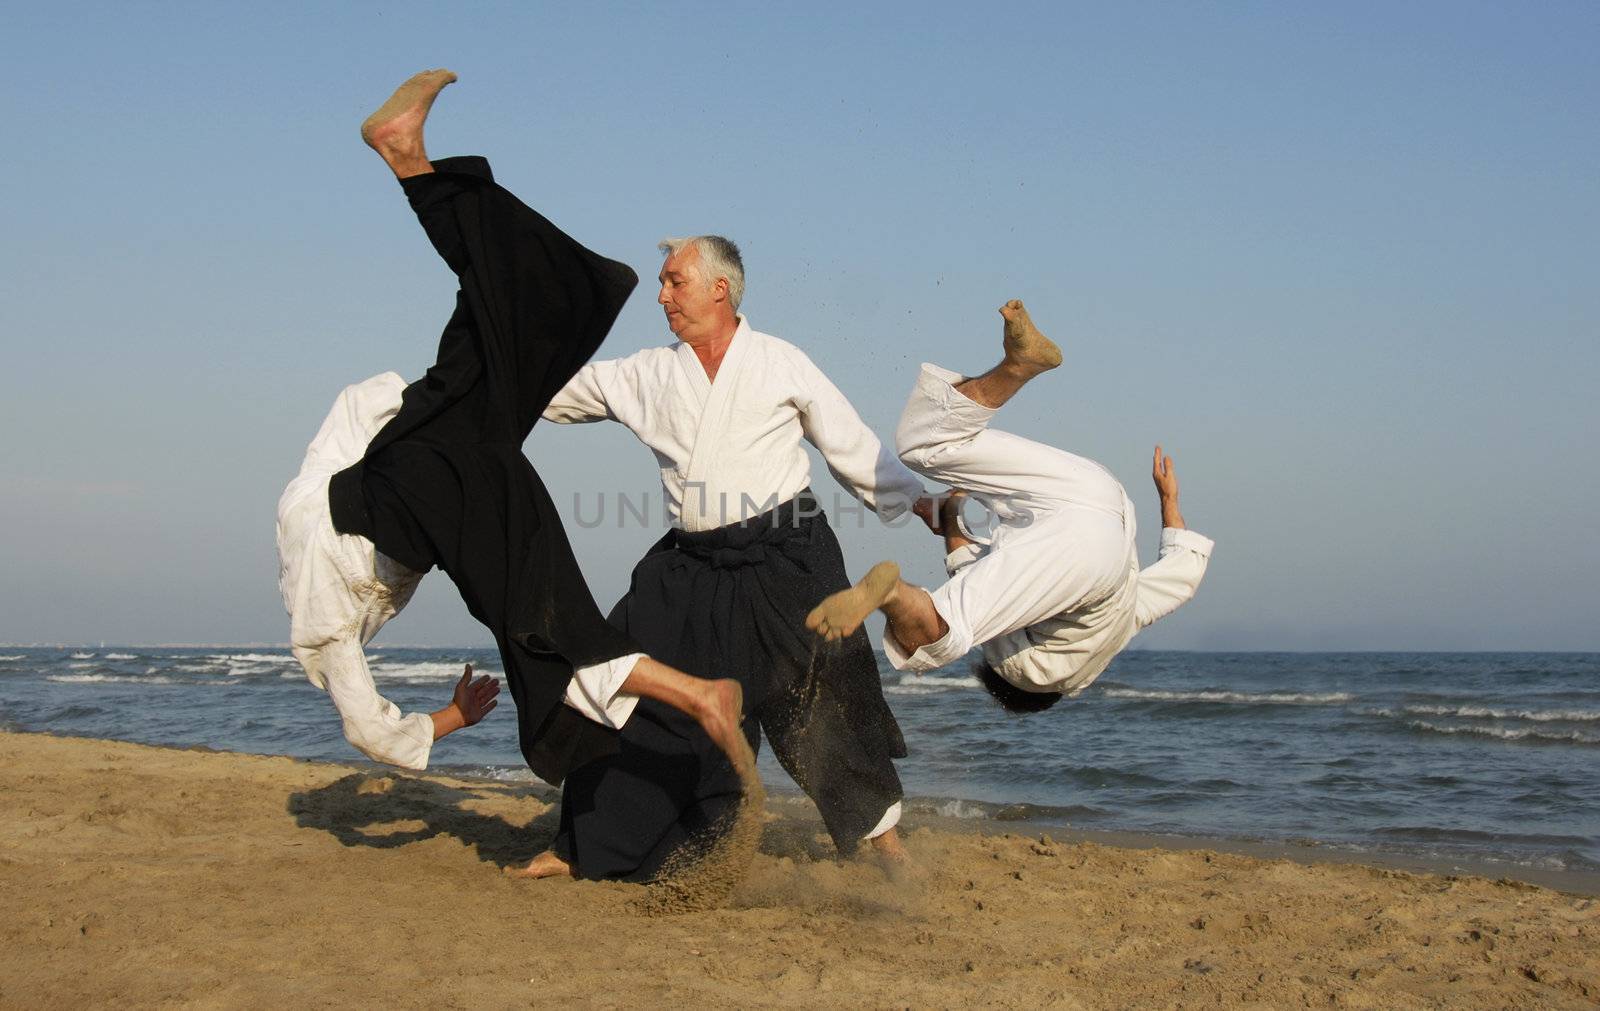 aikido on the beach by cynoclub